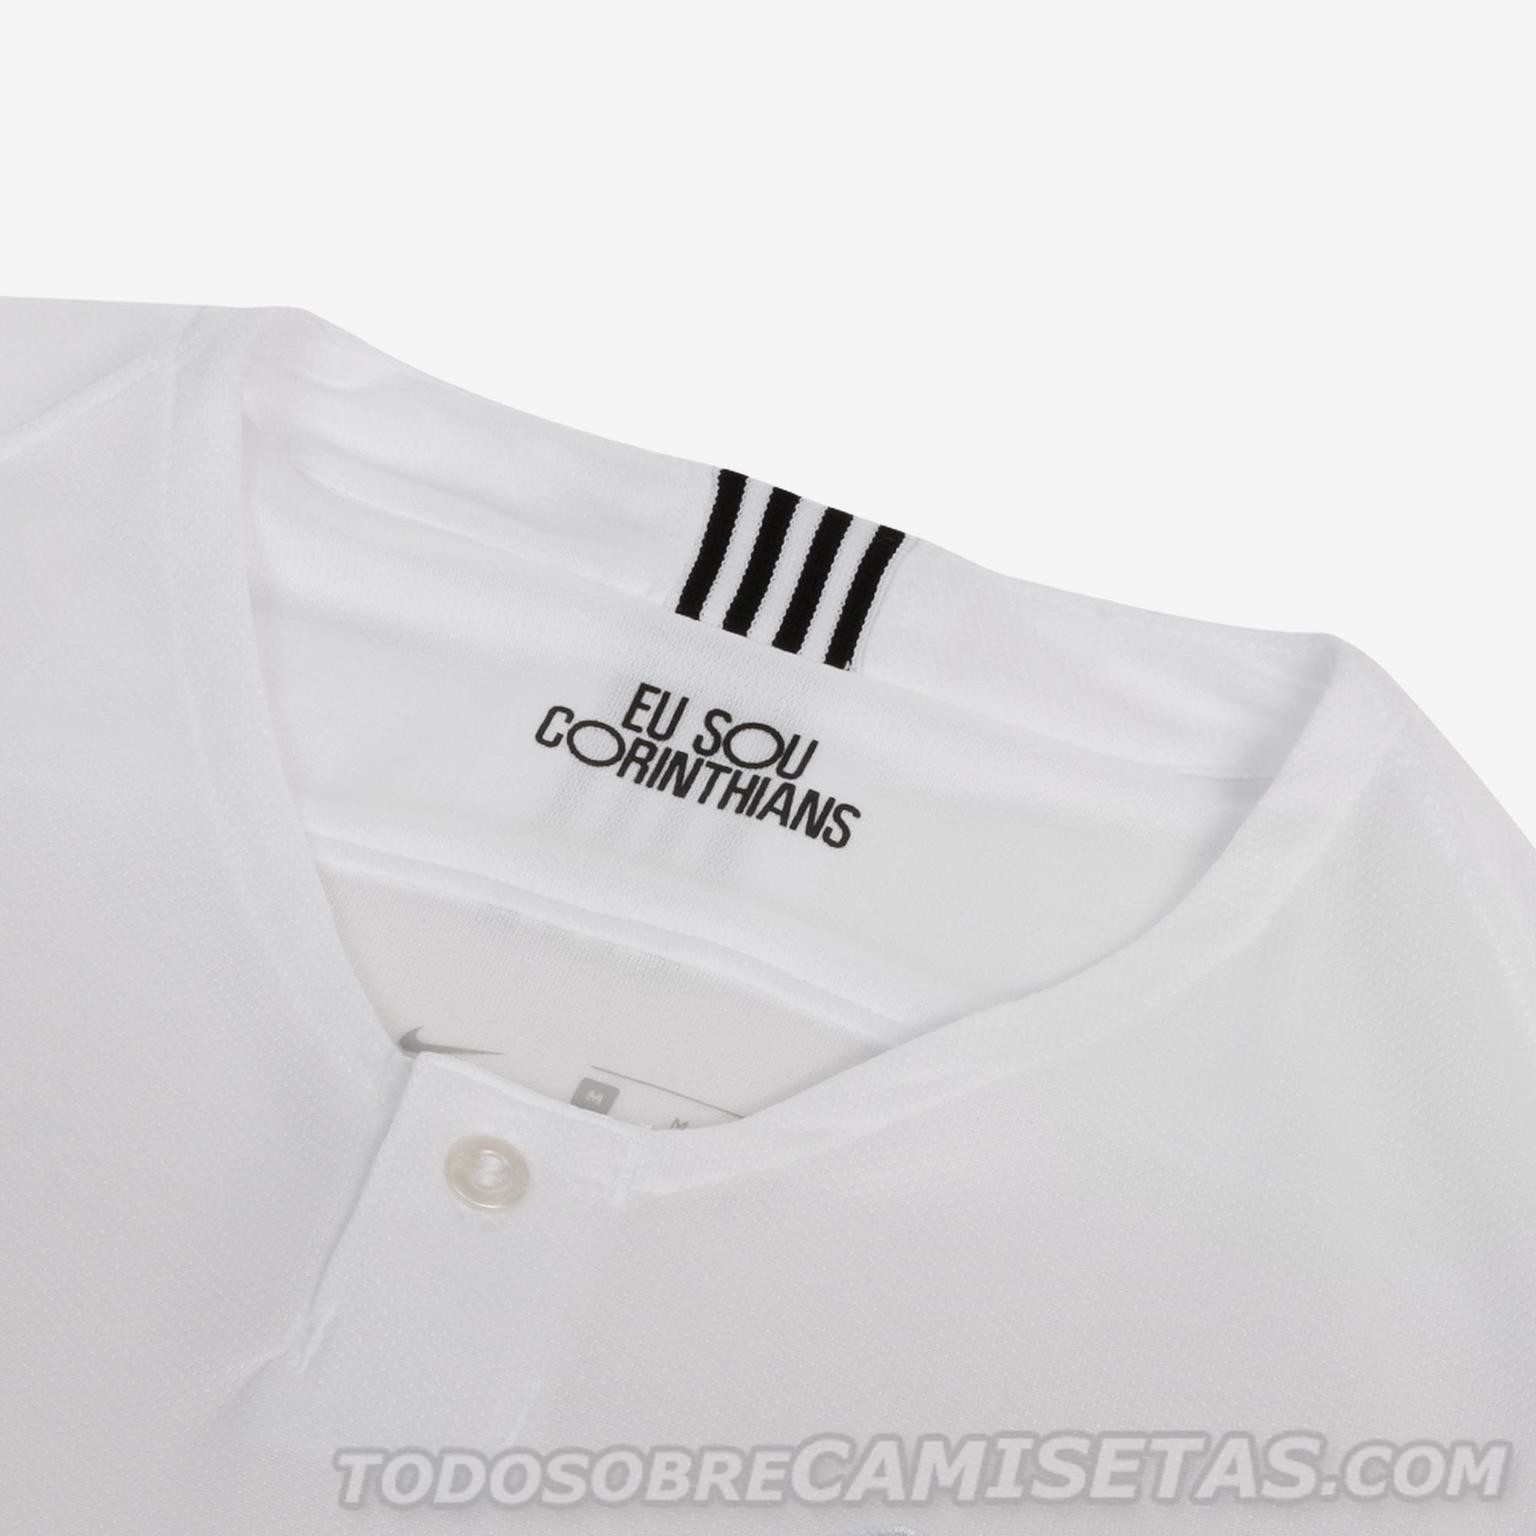 Camisas Nike de Corinthians 2018